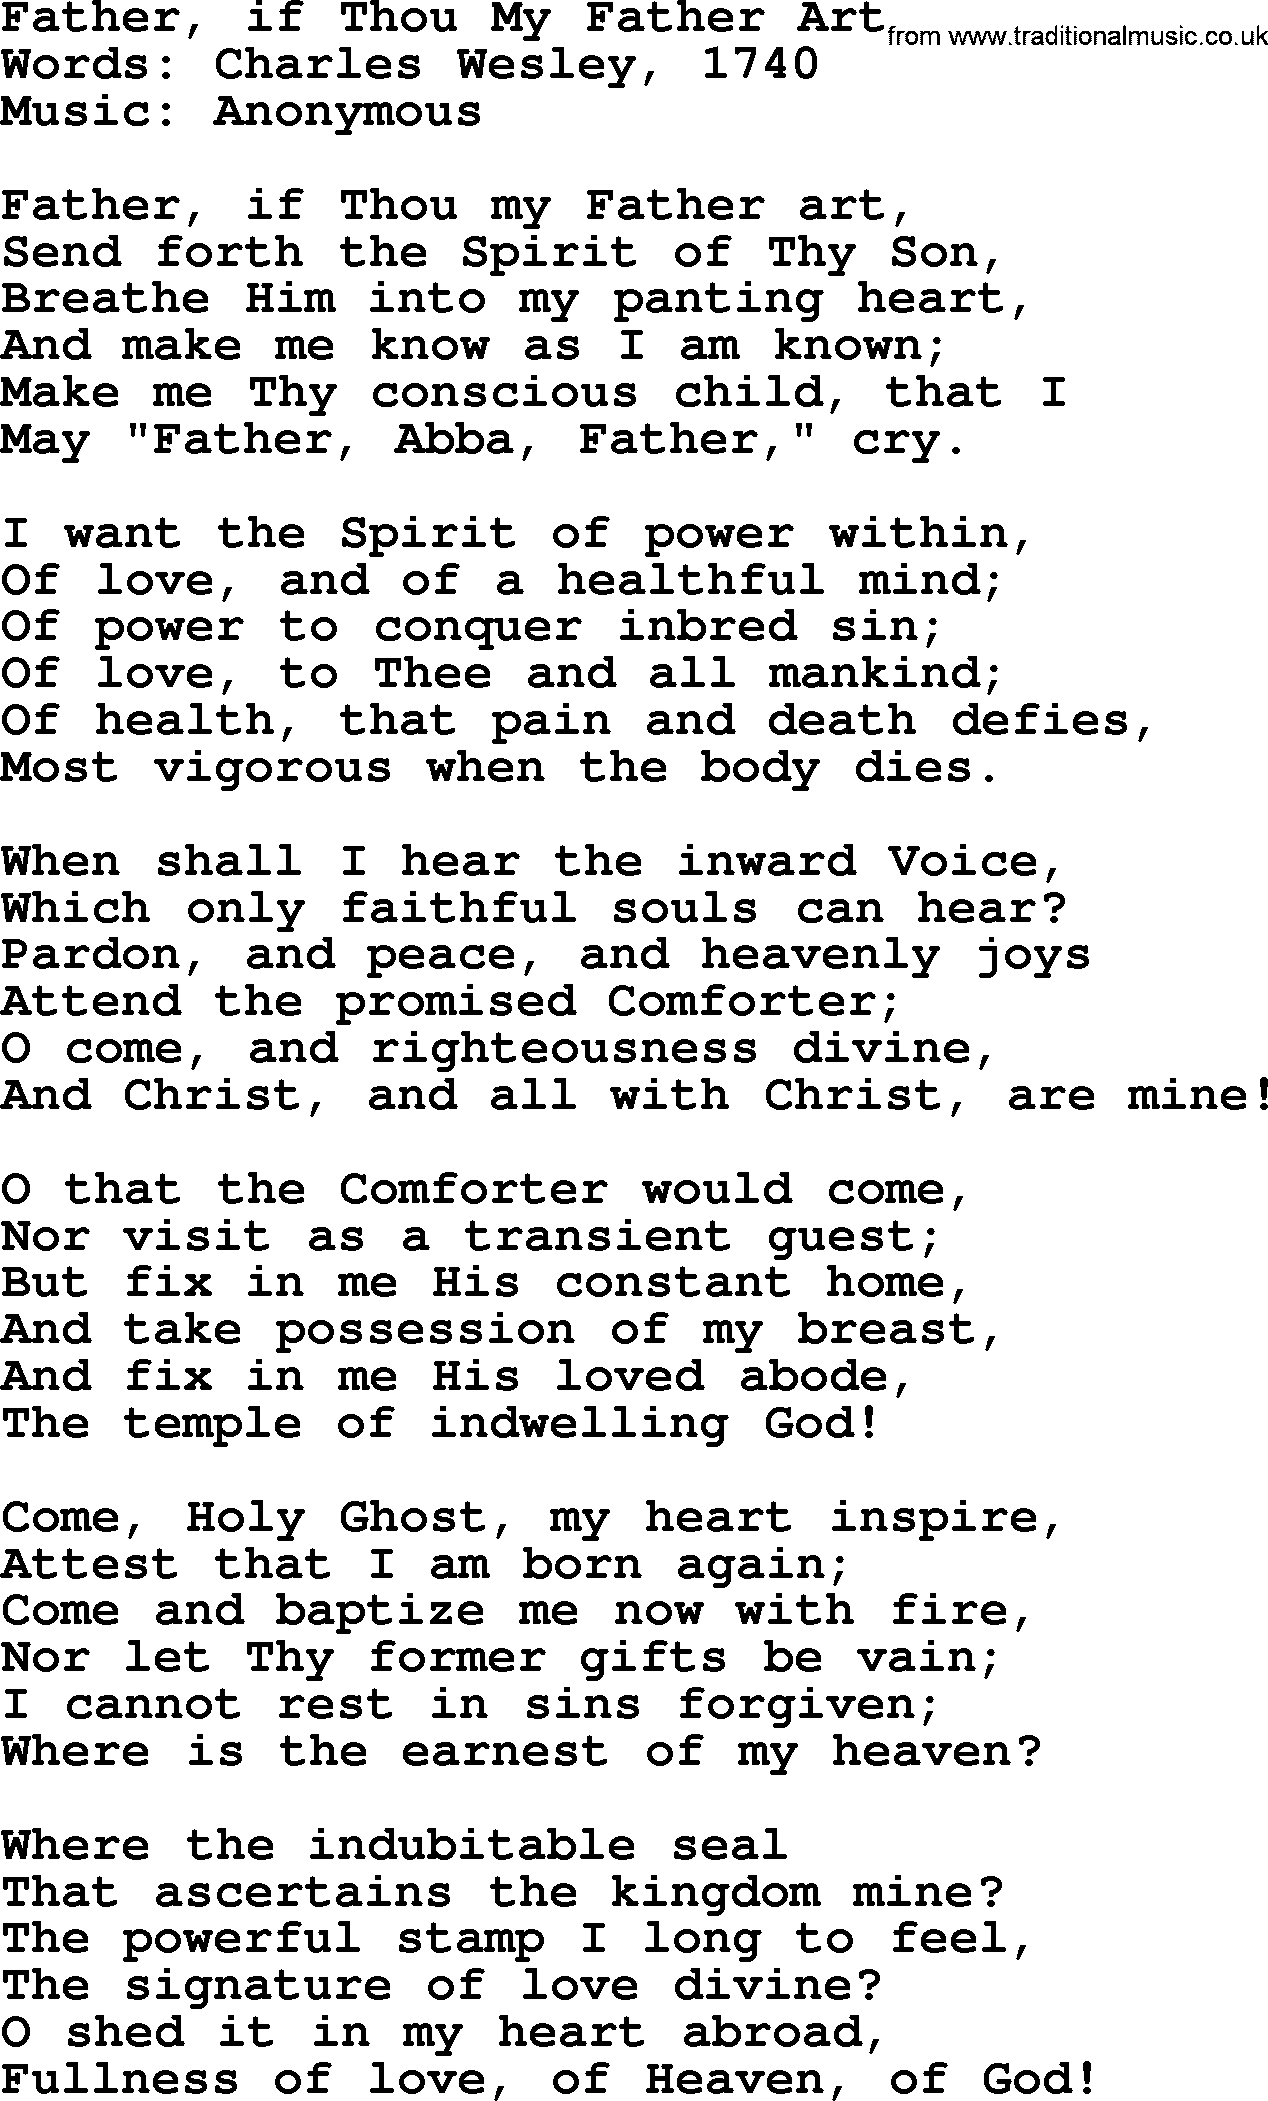 Forgiveness hymns, Hymn: Father, If Thou My Father Art, lyrics with PDF